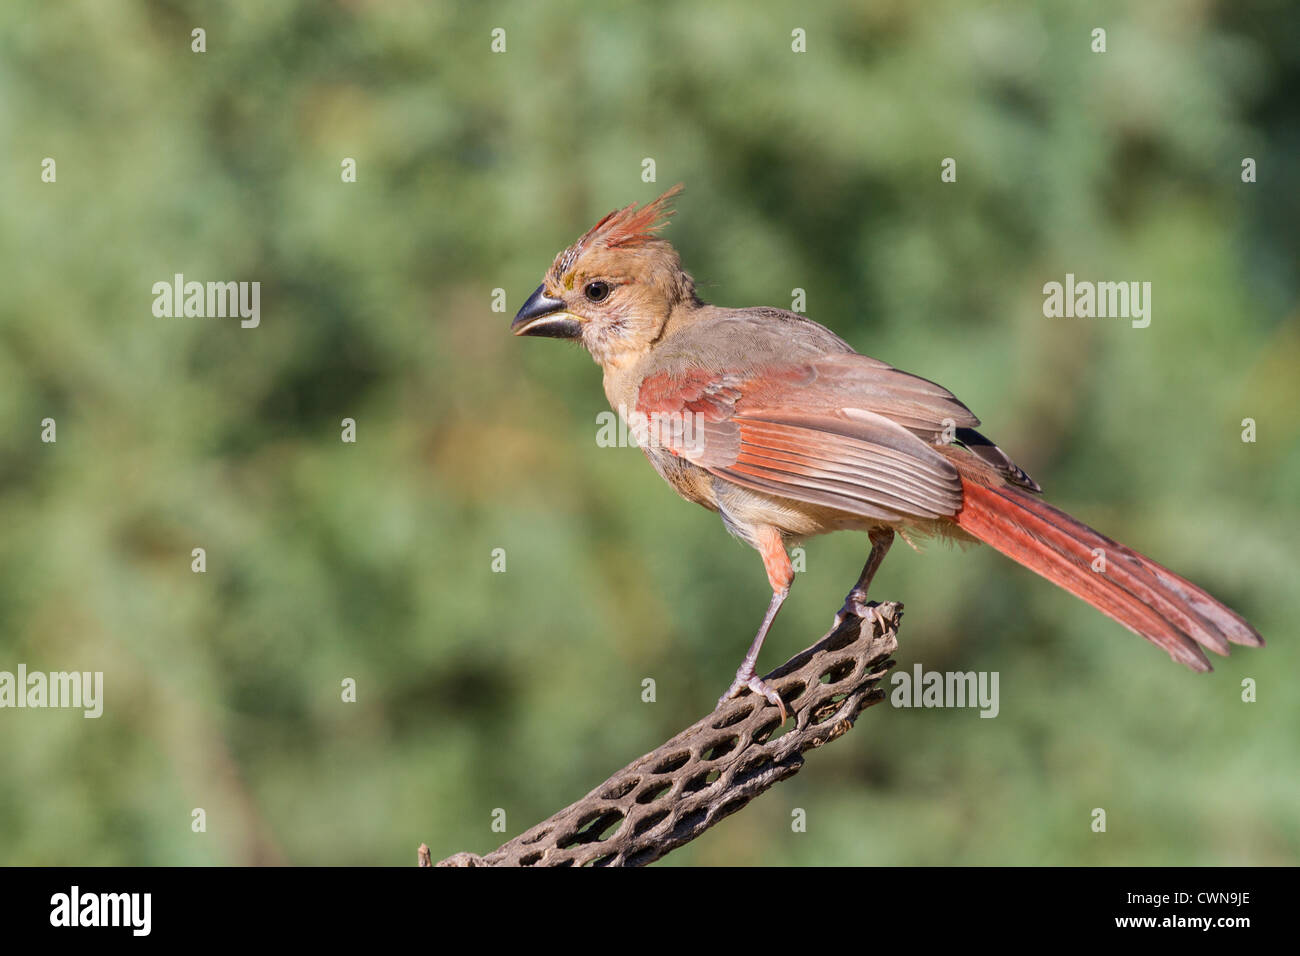 Juvenile Northern Cardinal, Cardinalis cardinalis, on Cane Cholla in Sonoran Desert in Southern Arizona. Stock Photo